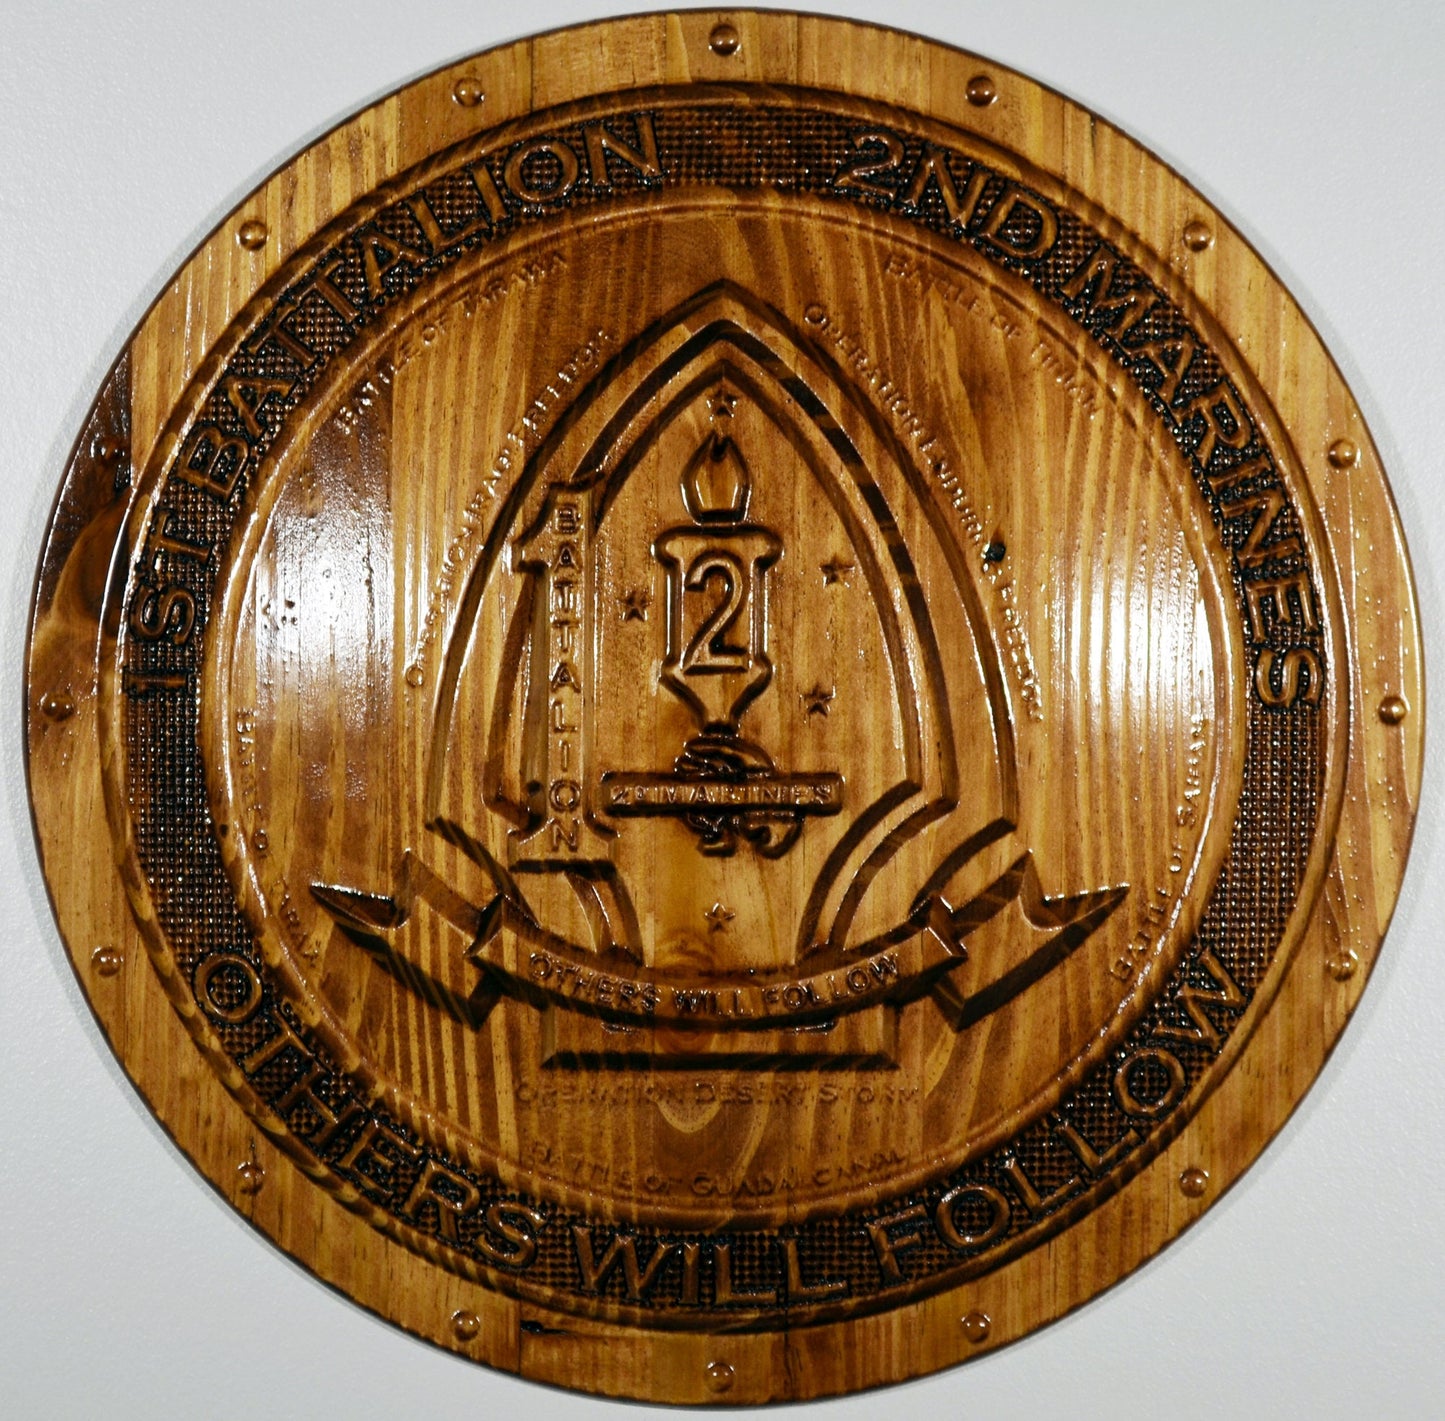 USMC 1st Battalion 2nd Marine Division,  3d wood carving, military plaque